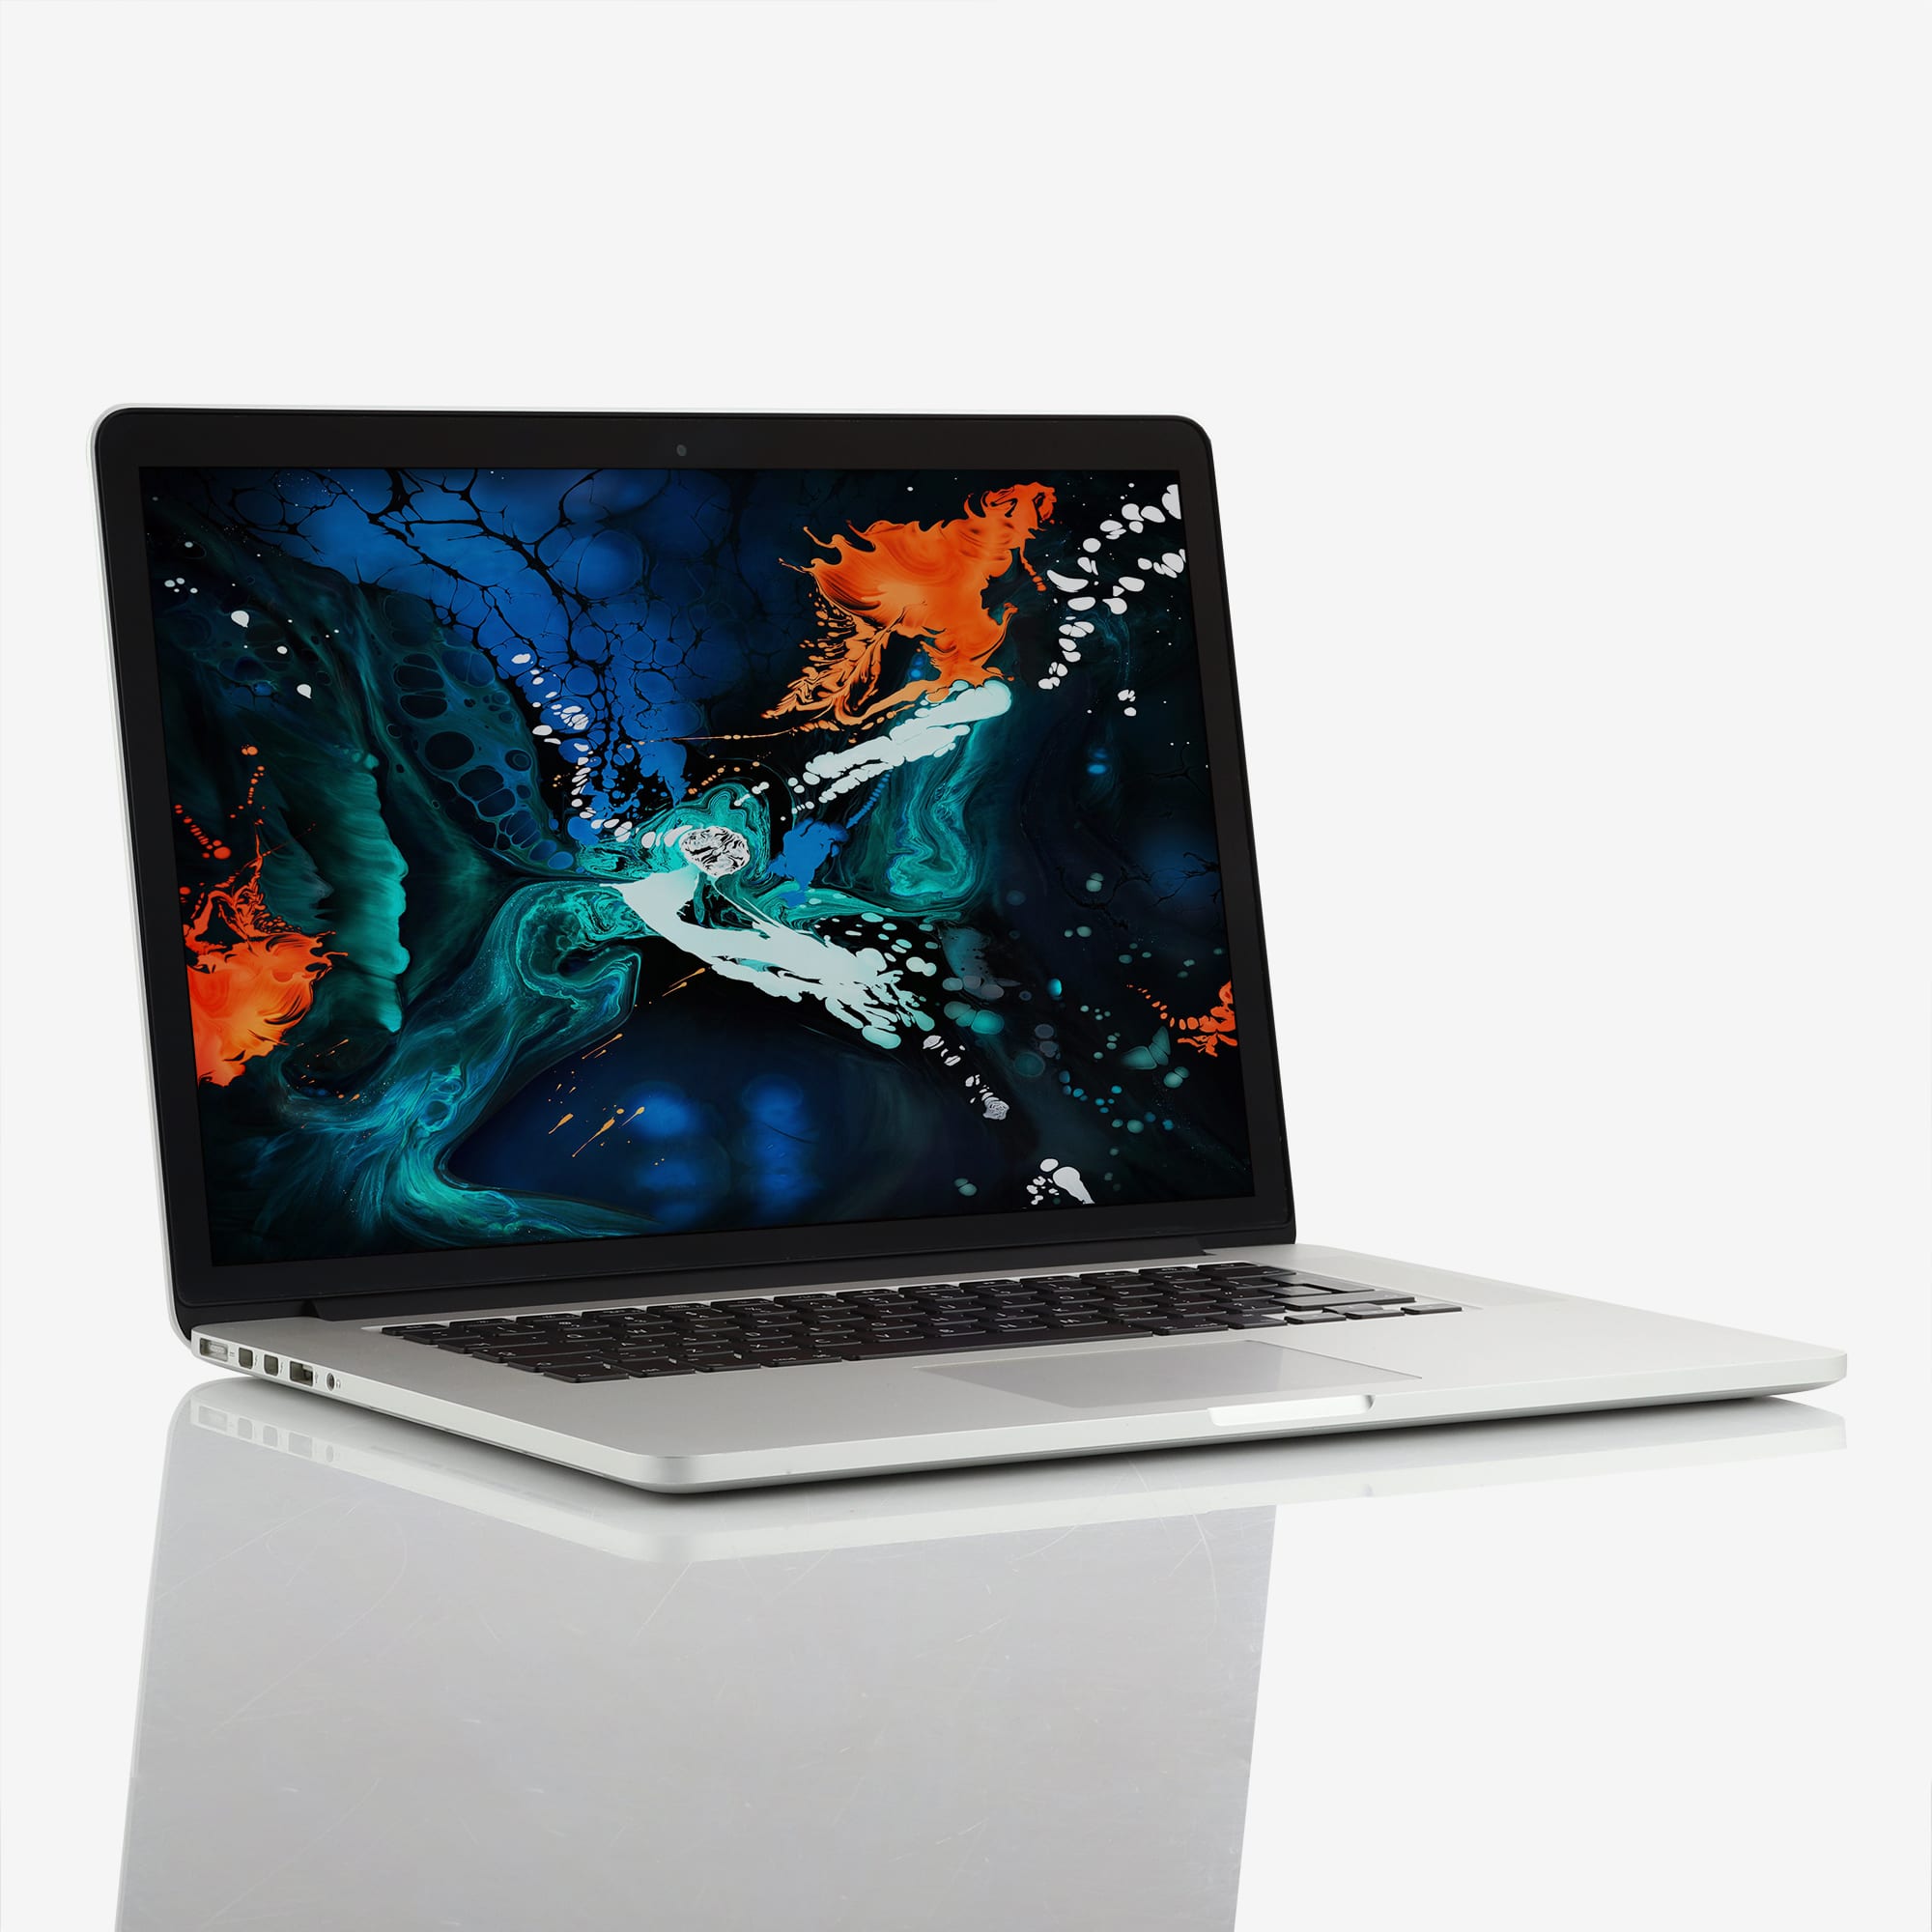 1 x Apple MacBook Pro Retina 15 Inch Intel Core i7 2.30 GHz (2013)